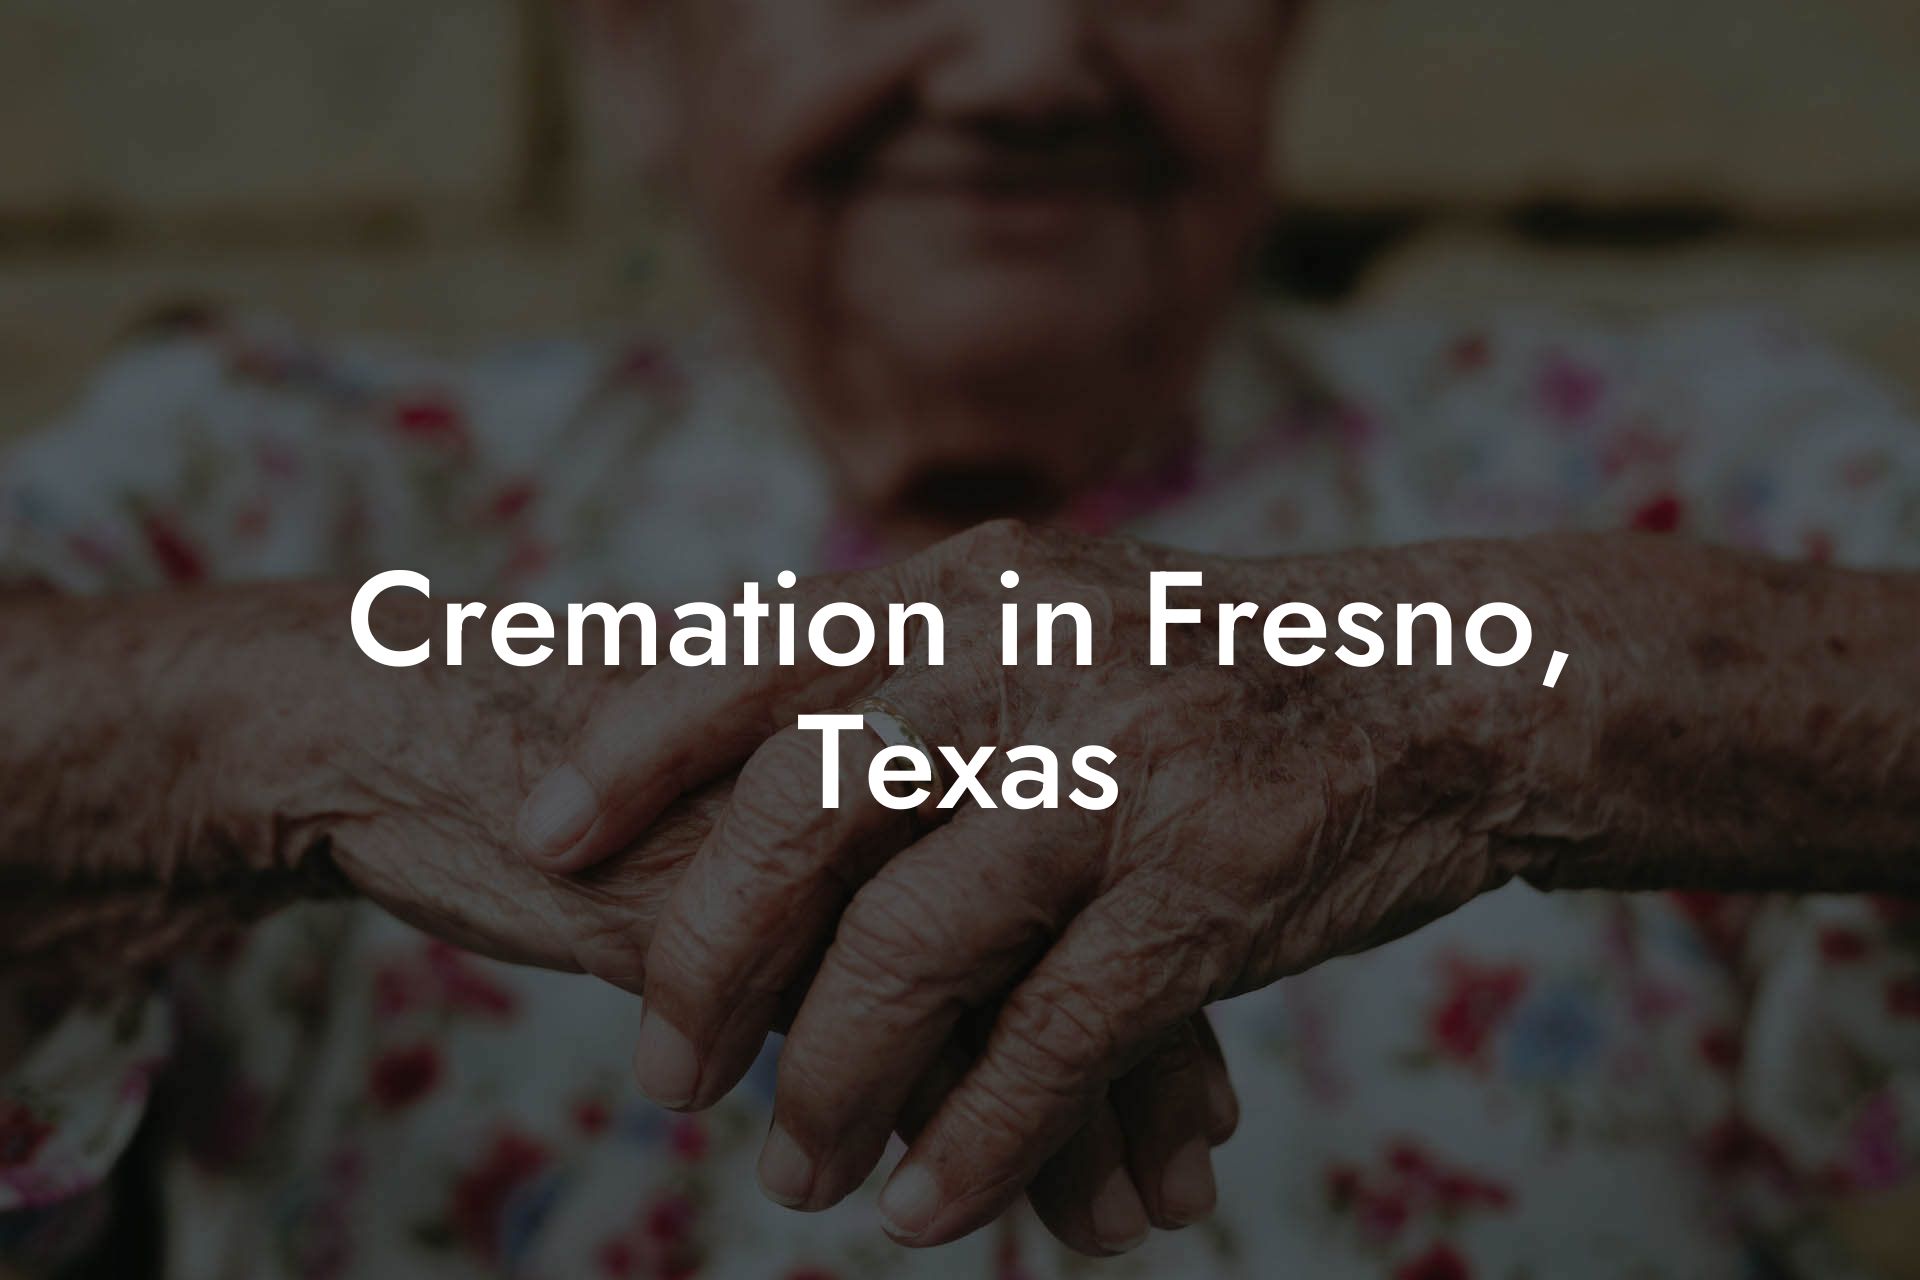 Cremation in Fresno, Texas